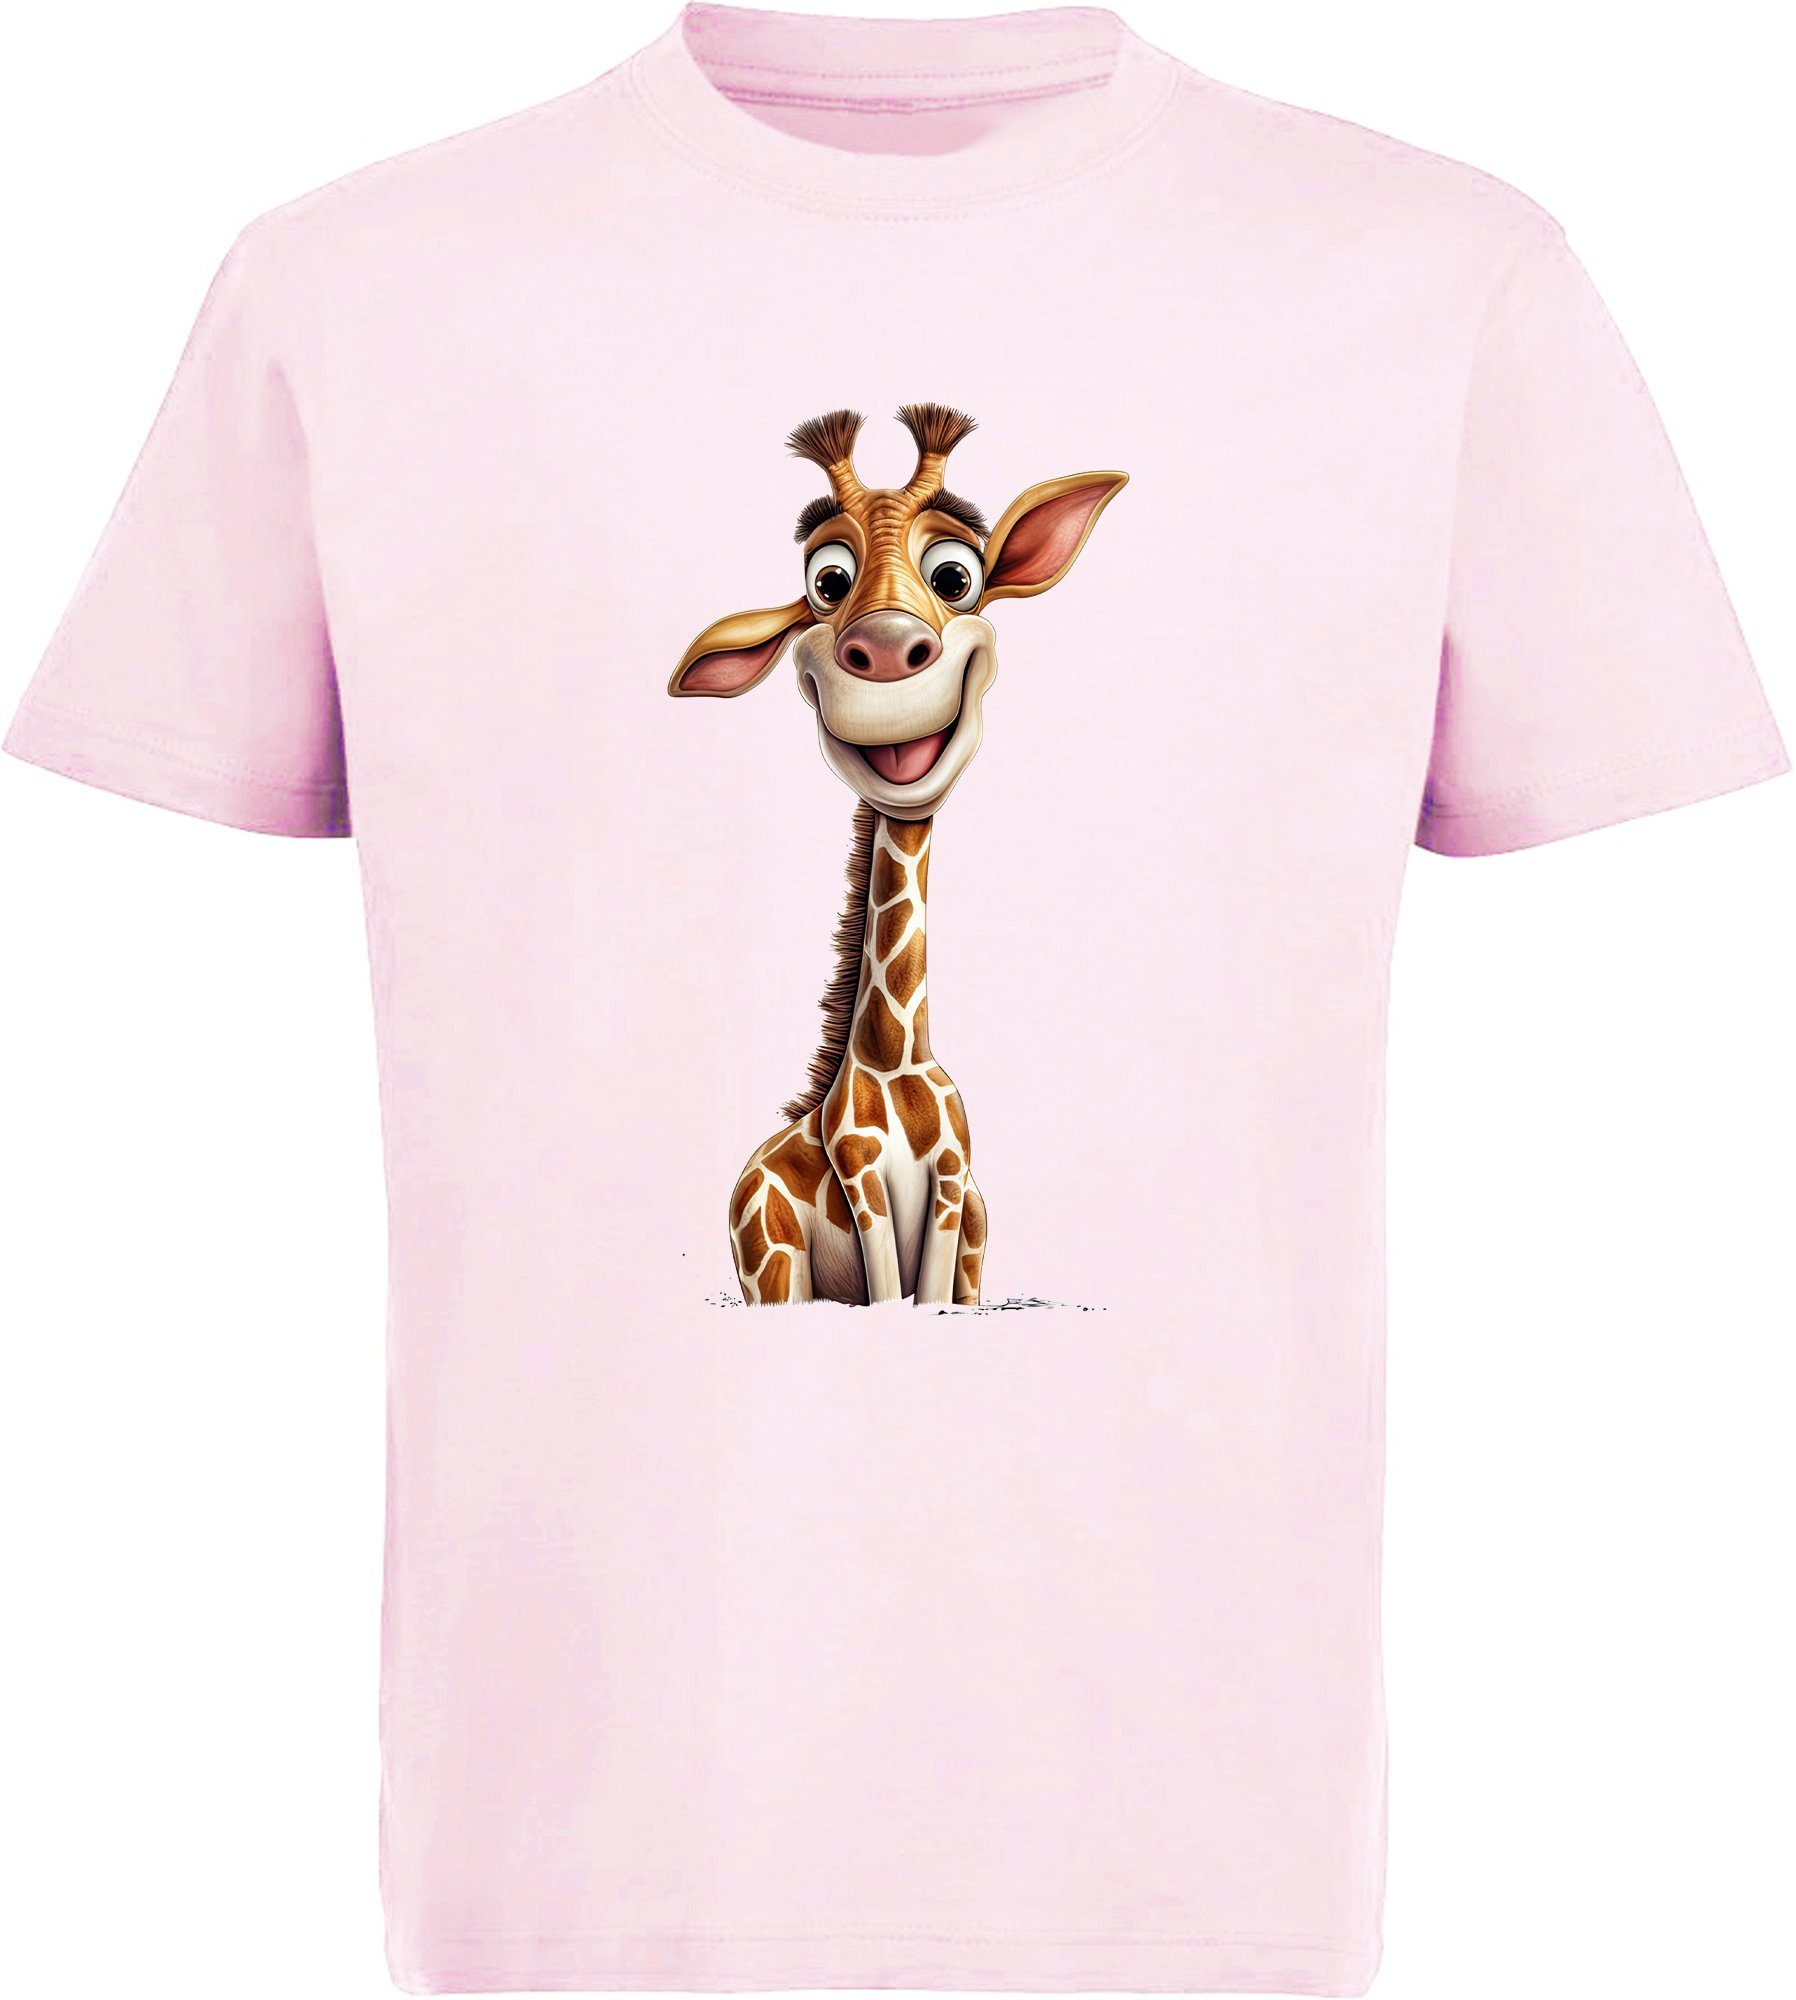 MyDesign24 T-Shirt i273 rosa Aufdruck, Shirt Kinder bedruckt Wildtier Baby mit Baumwollshirt Print Giraffe 